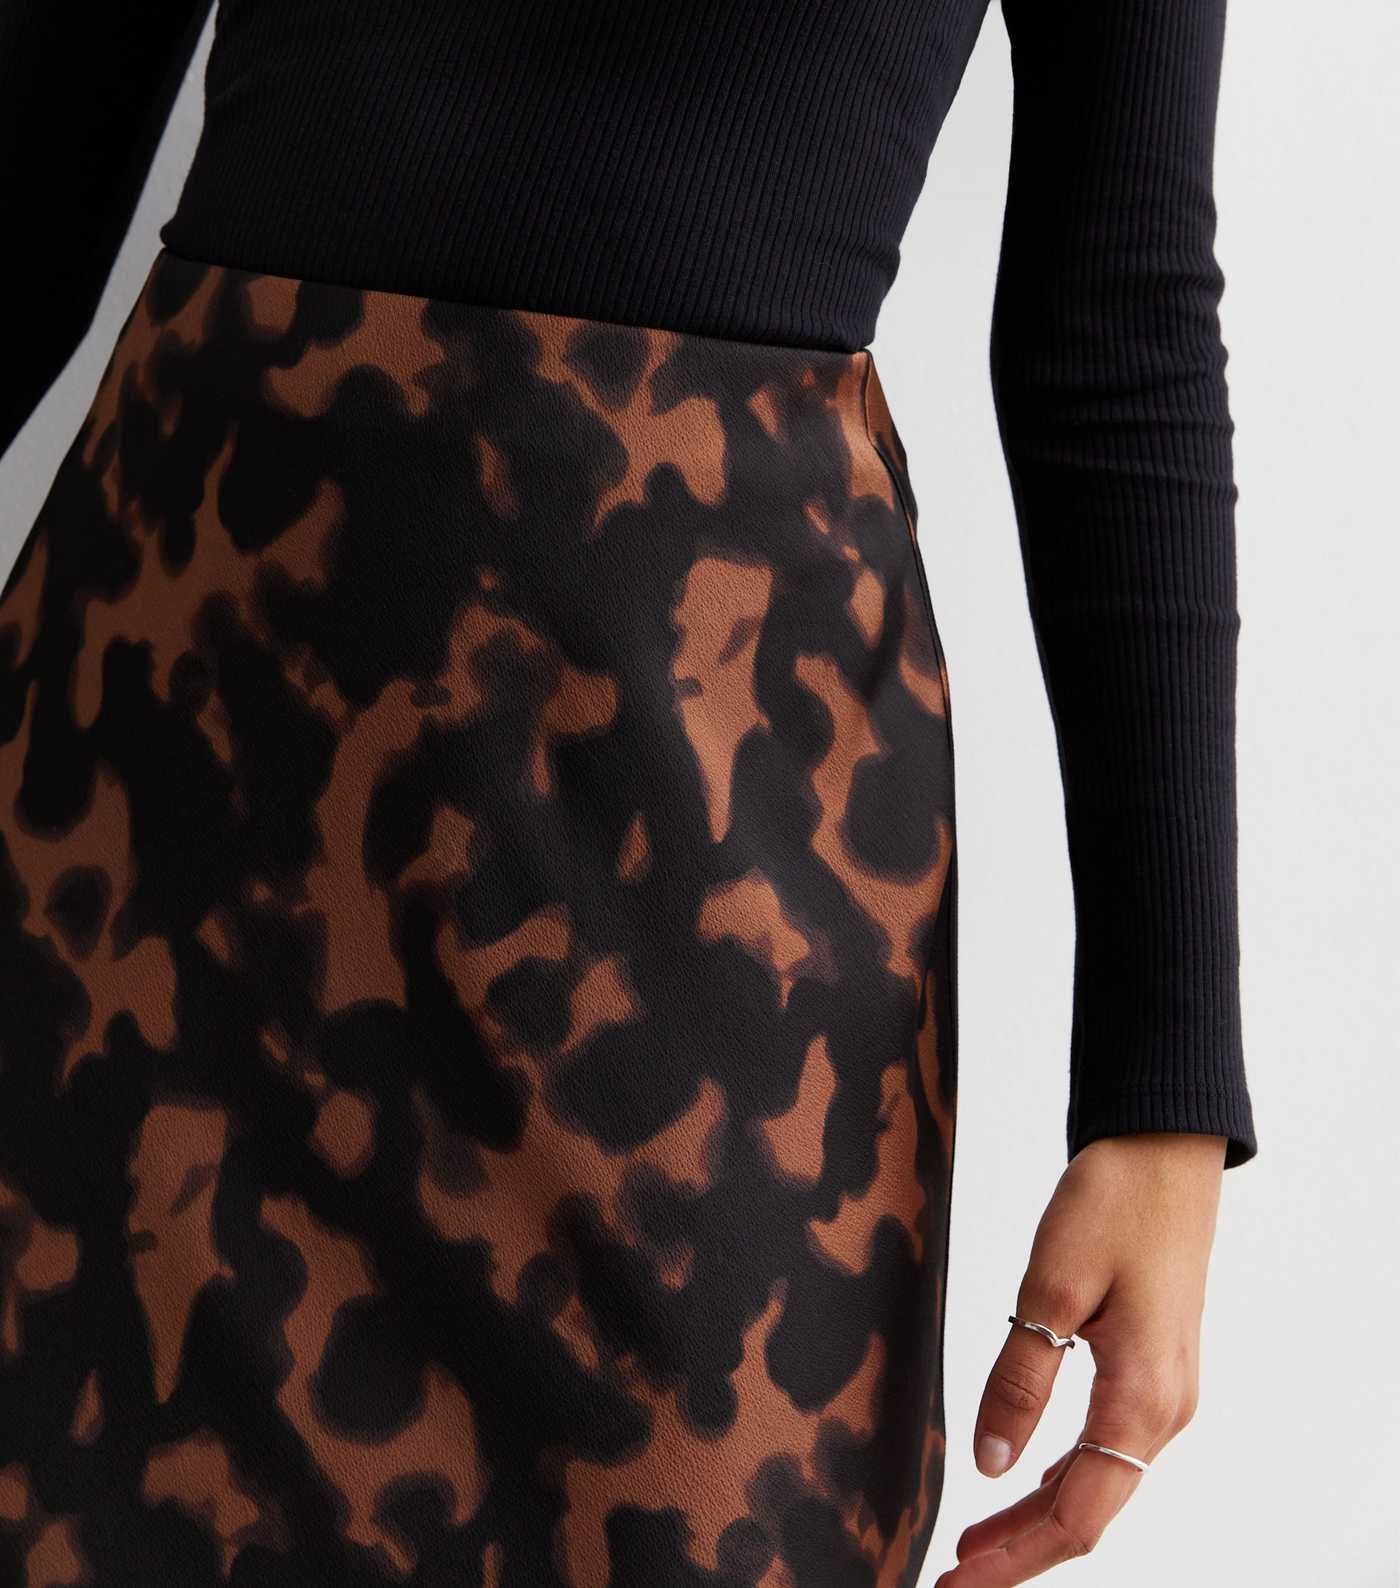 Brown Tortoiseshell Print Satin Bias Cut Midaxi Skirt
						
						Add to Saved Items
						Remov... | New Look (UK)